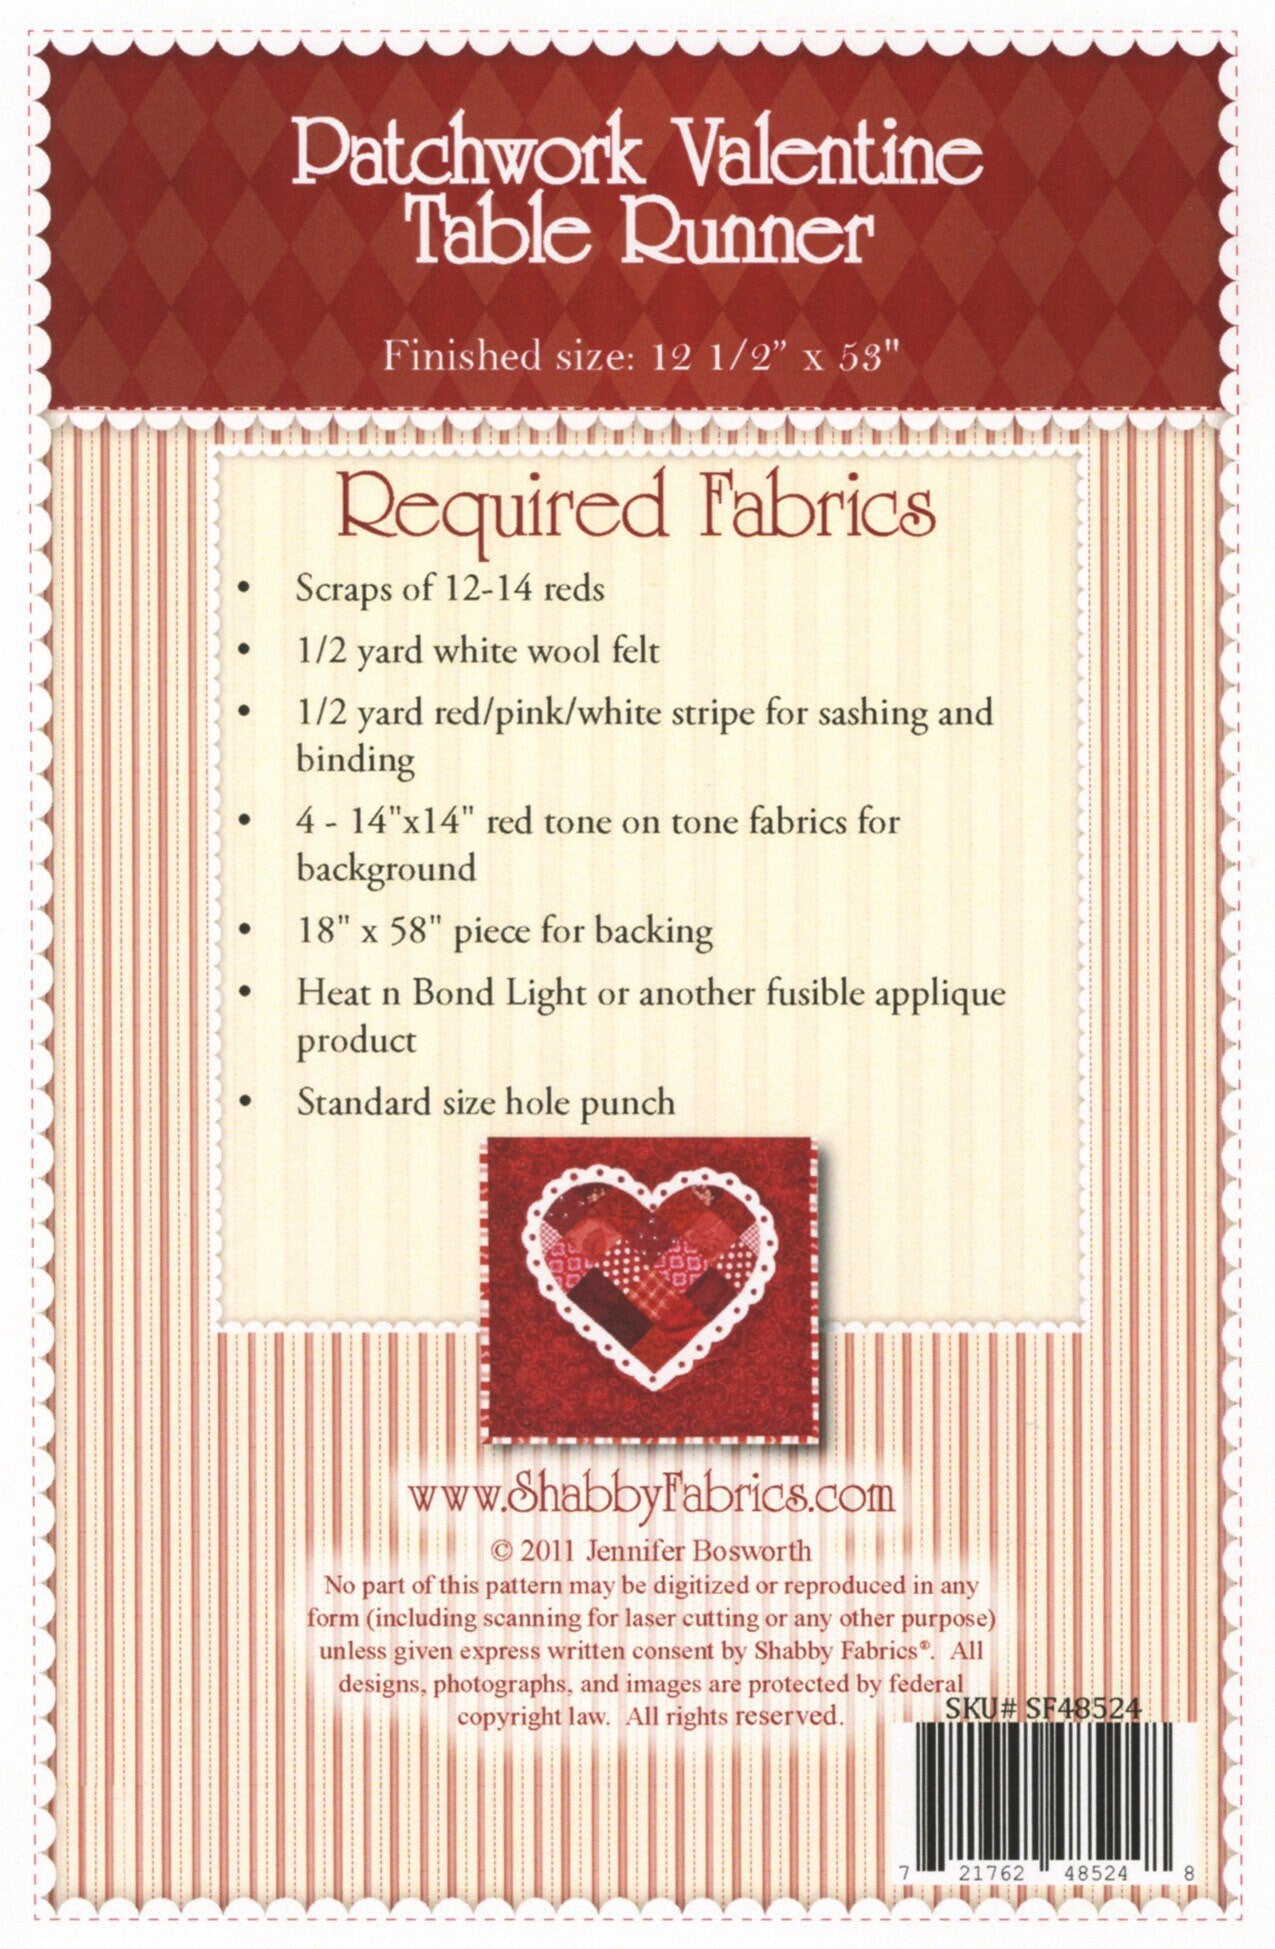 Patchwork Valentine Table Runner Pattern - Shabby Fabrics - Jennifer Bosworth - Heart Quilt Pattern - Valentines Day Quilt Pattern